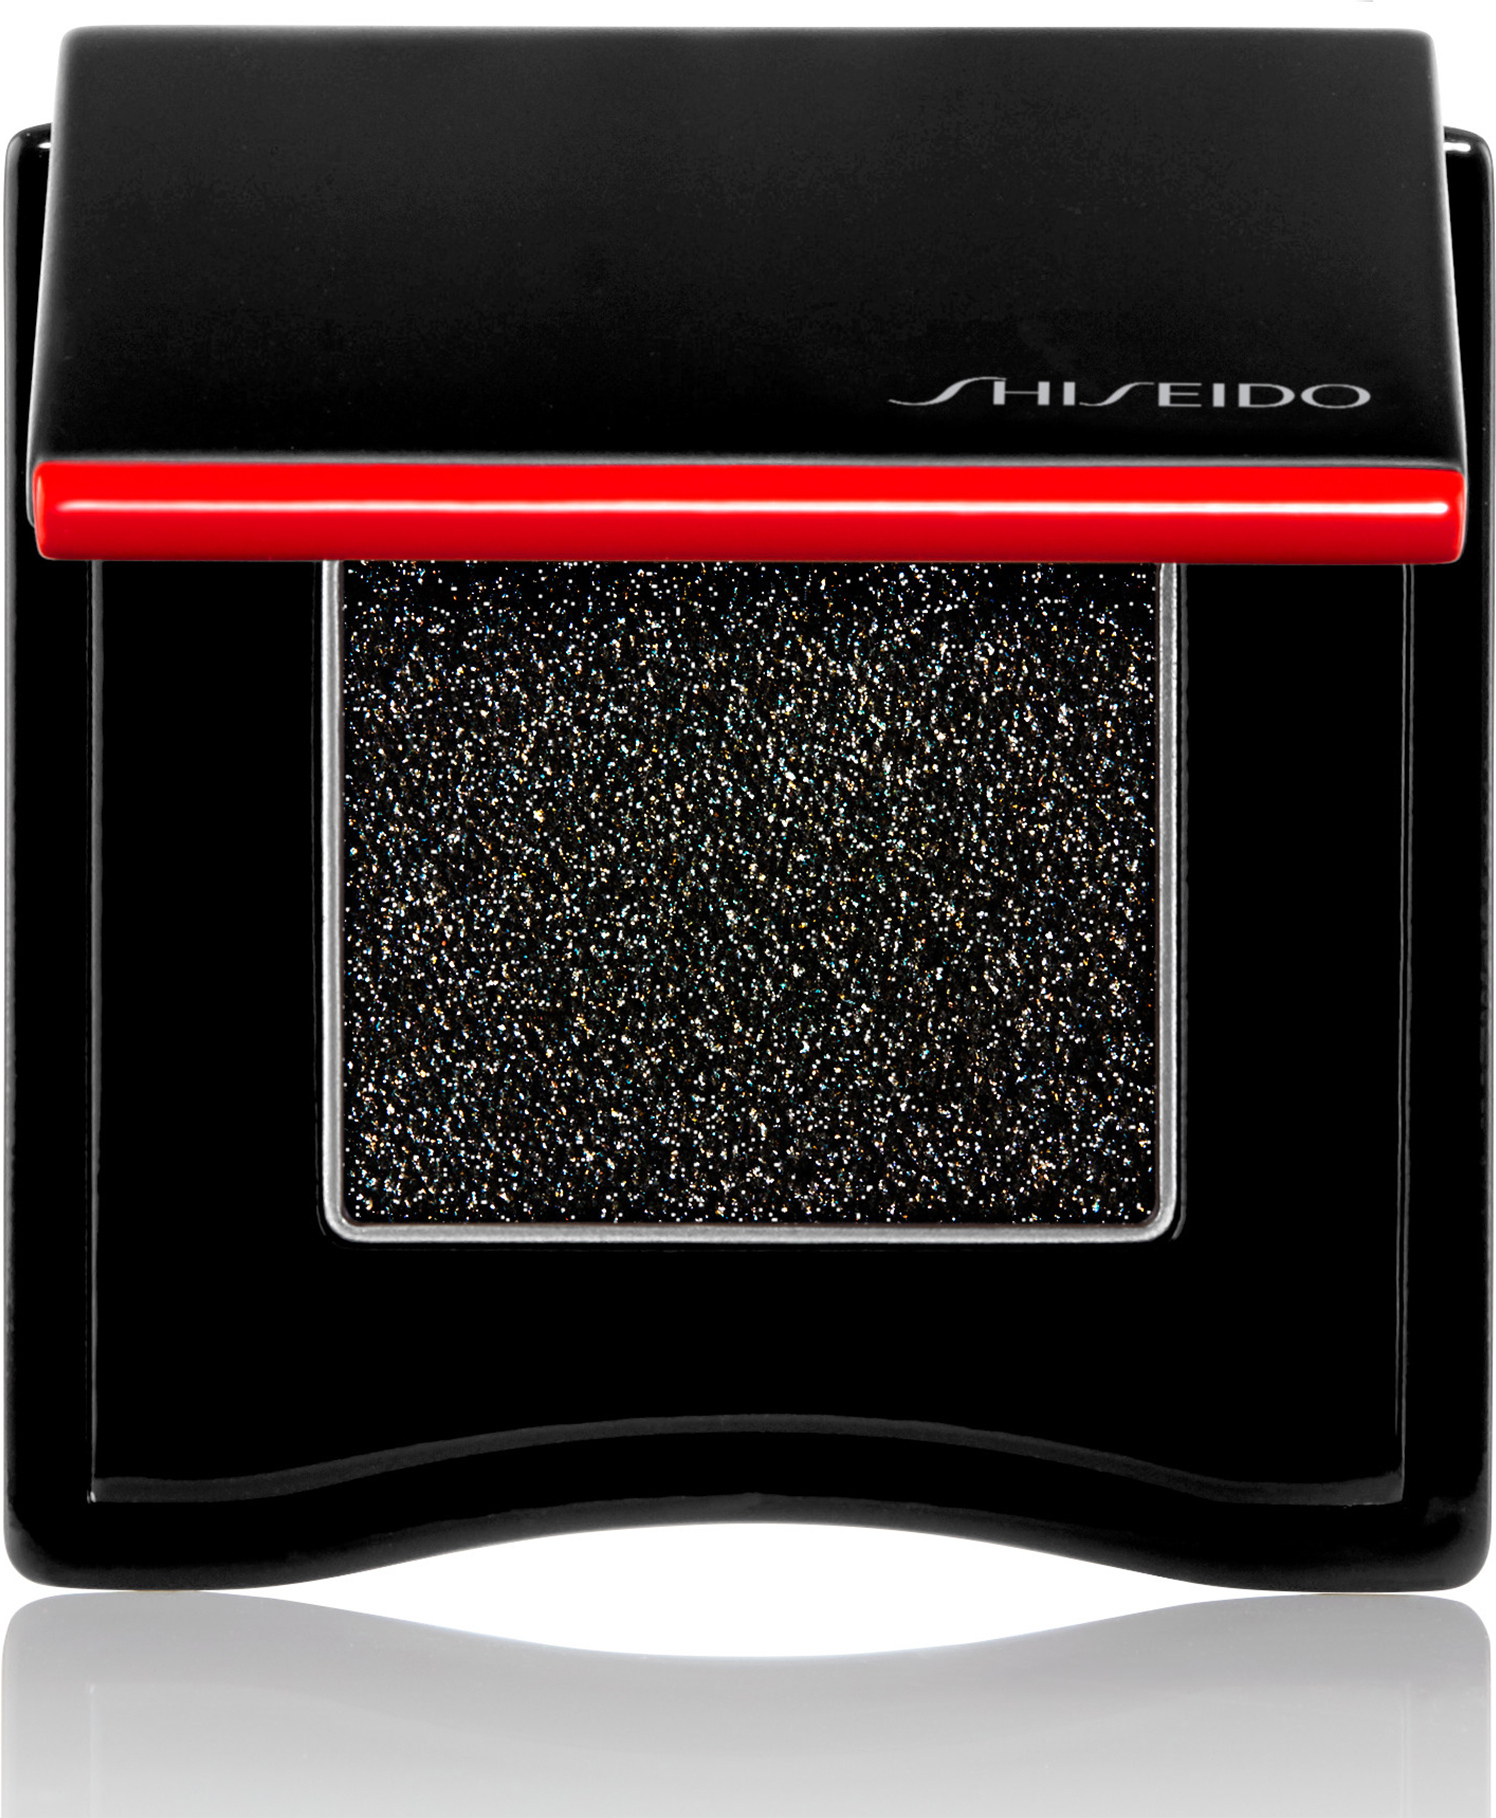 Shiseido POP PowderGel Eye Shadow 09 Dododo Black